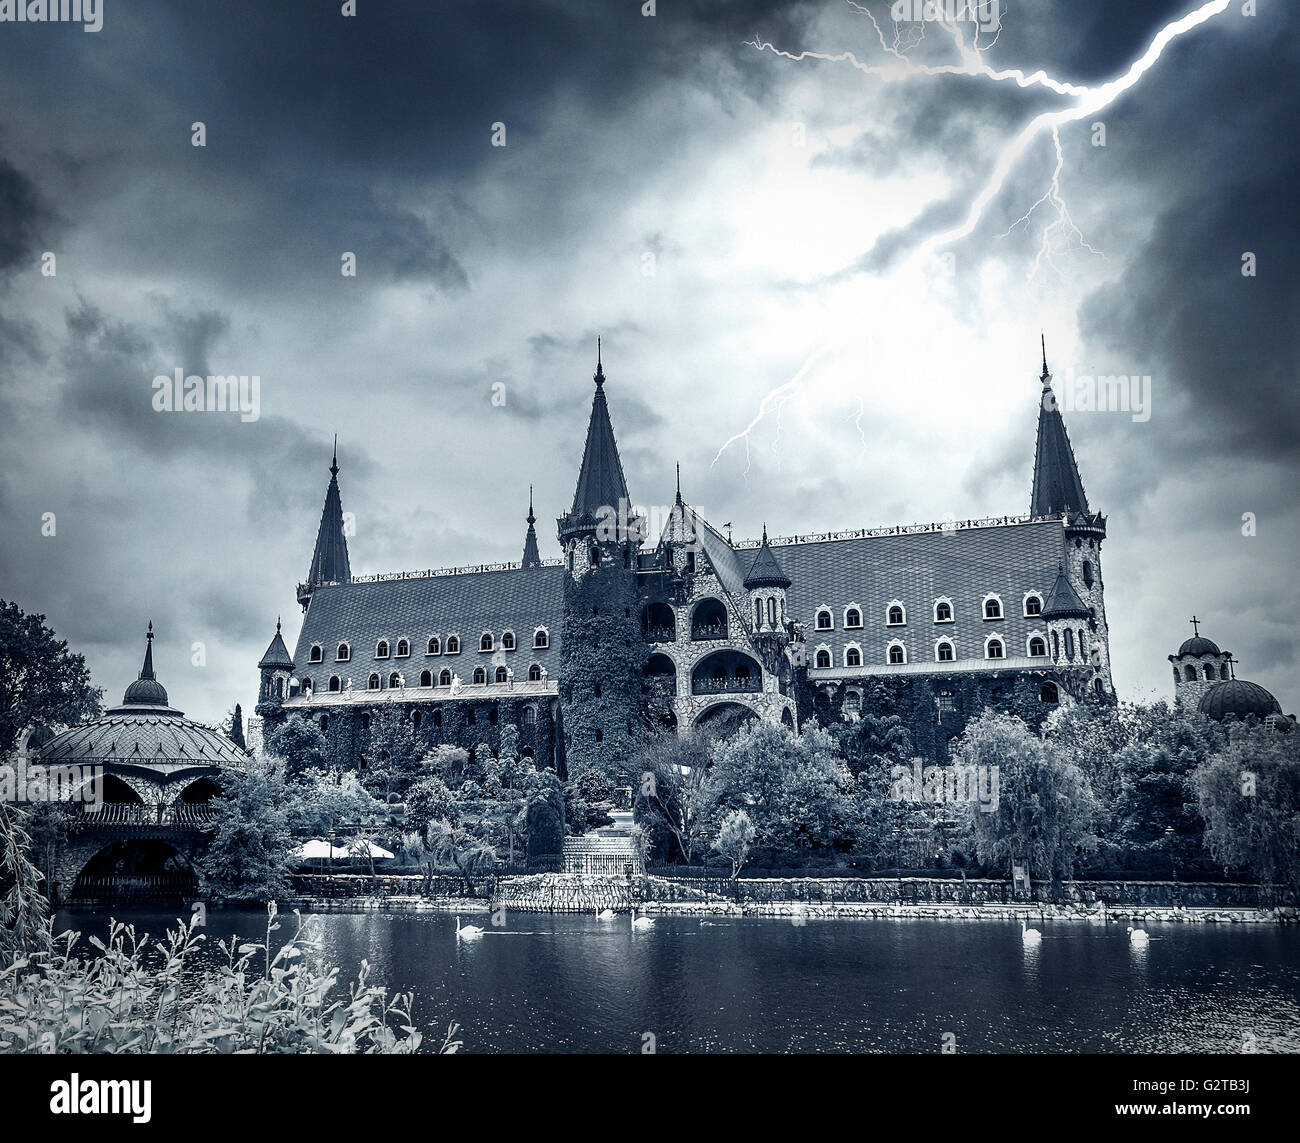 Lightning in the dark sky over the old stone castle. Stock Photo